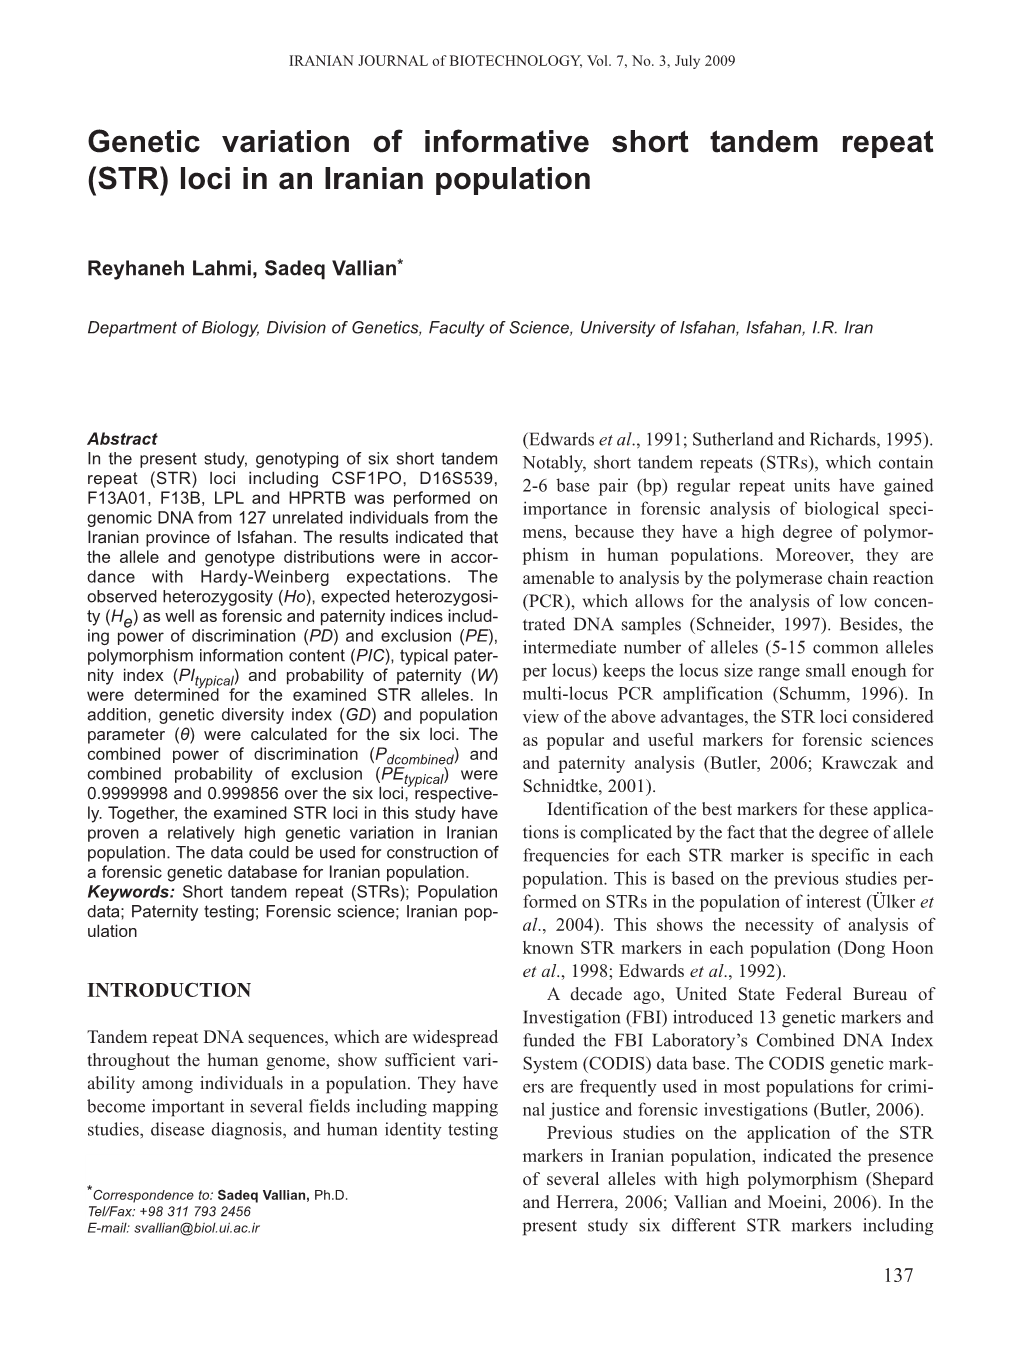 Genetic Variation of Informative Short Tandem Repeat (STR) Loci in an Iranian Population